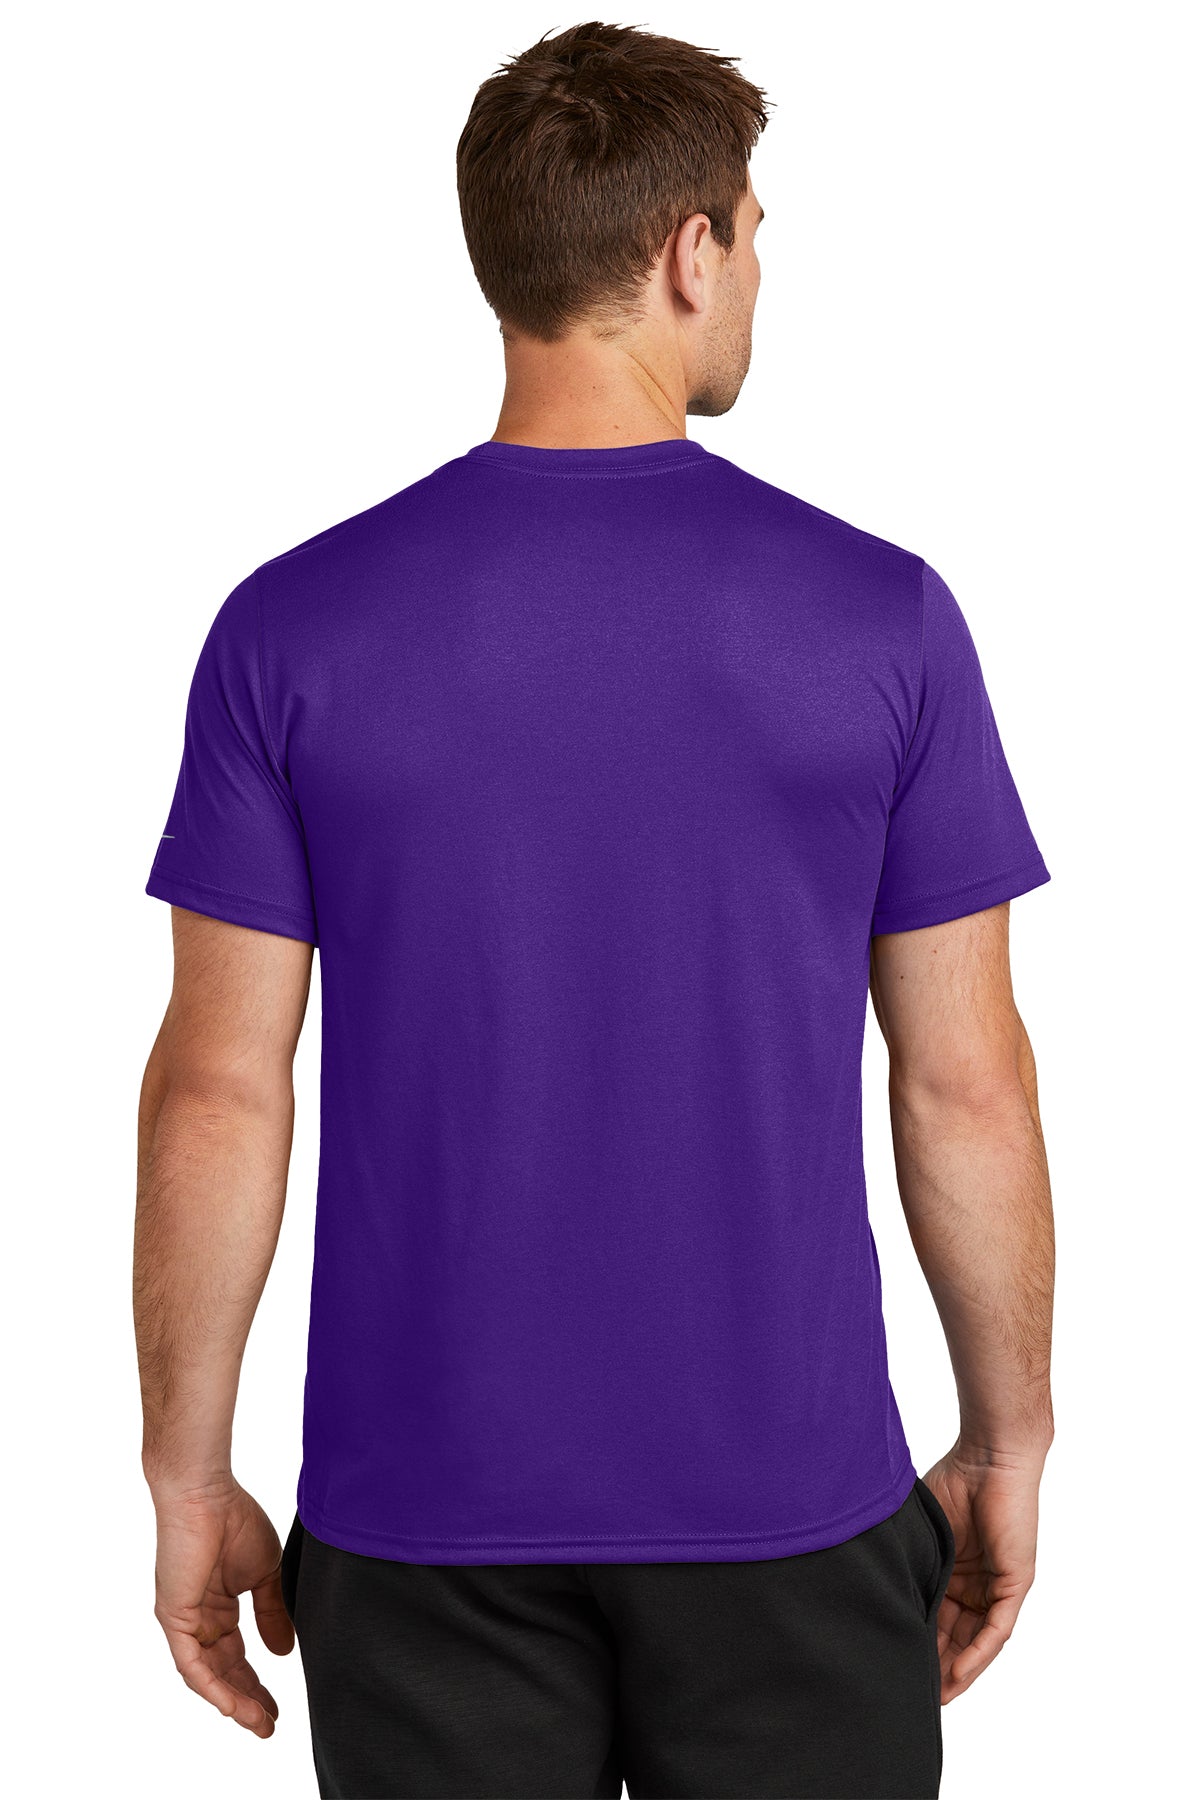 Nike Swoosh Sleeve rLegend Customized Tee's, Court Purple